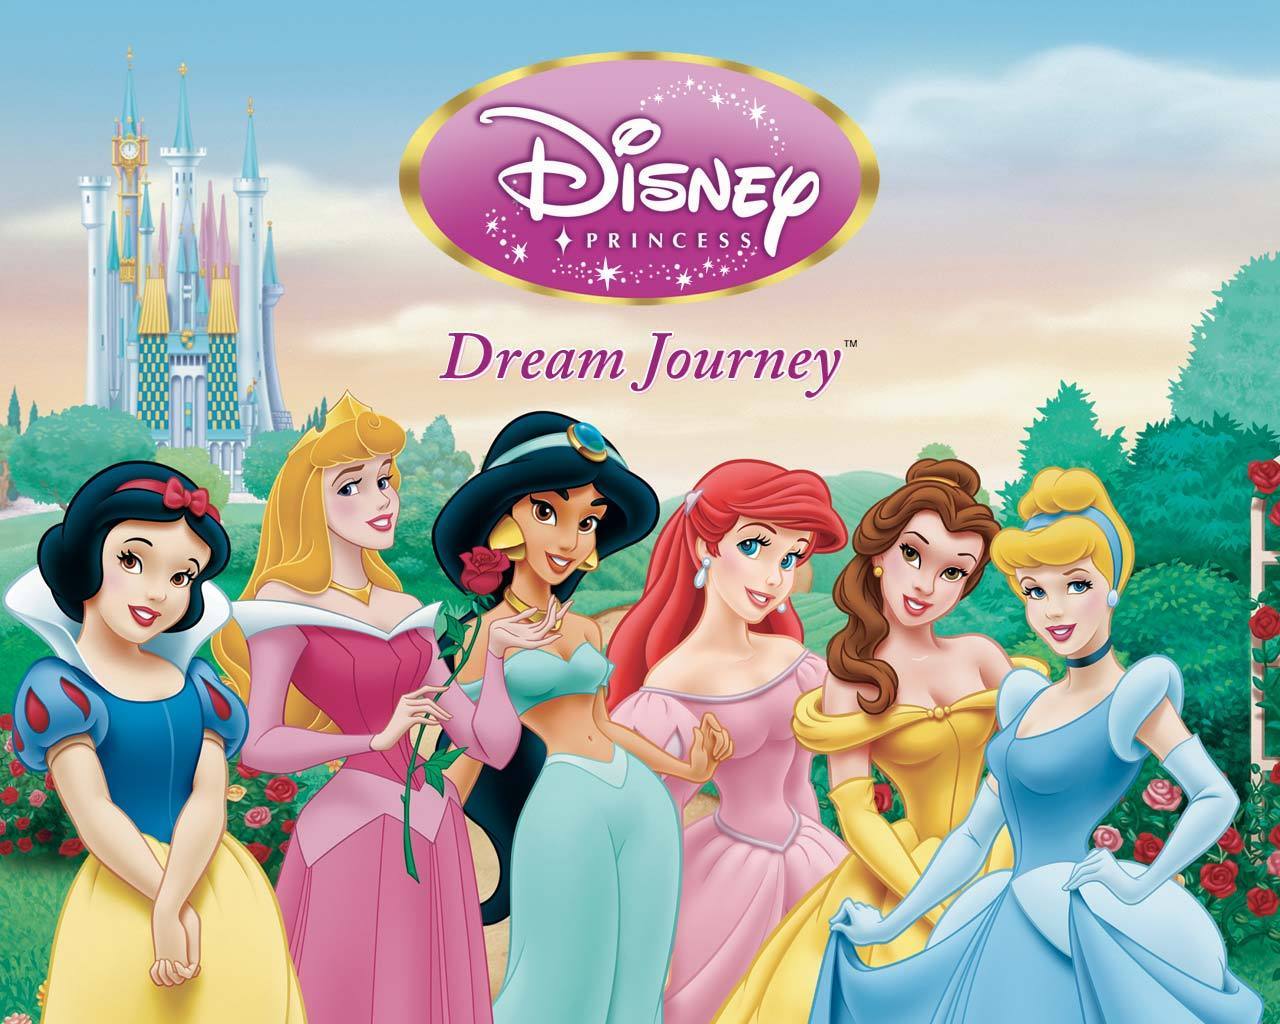 Disney - barbie and disney princess 3 Wallpaper 21381360 - Fanpop